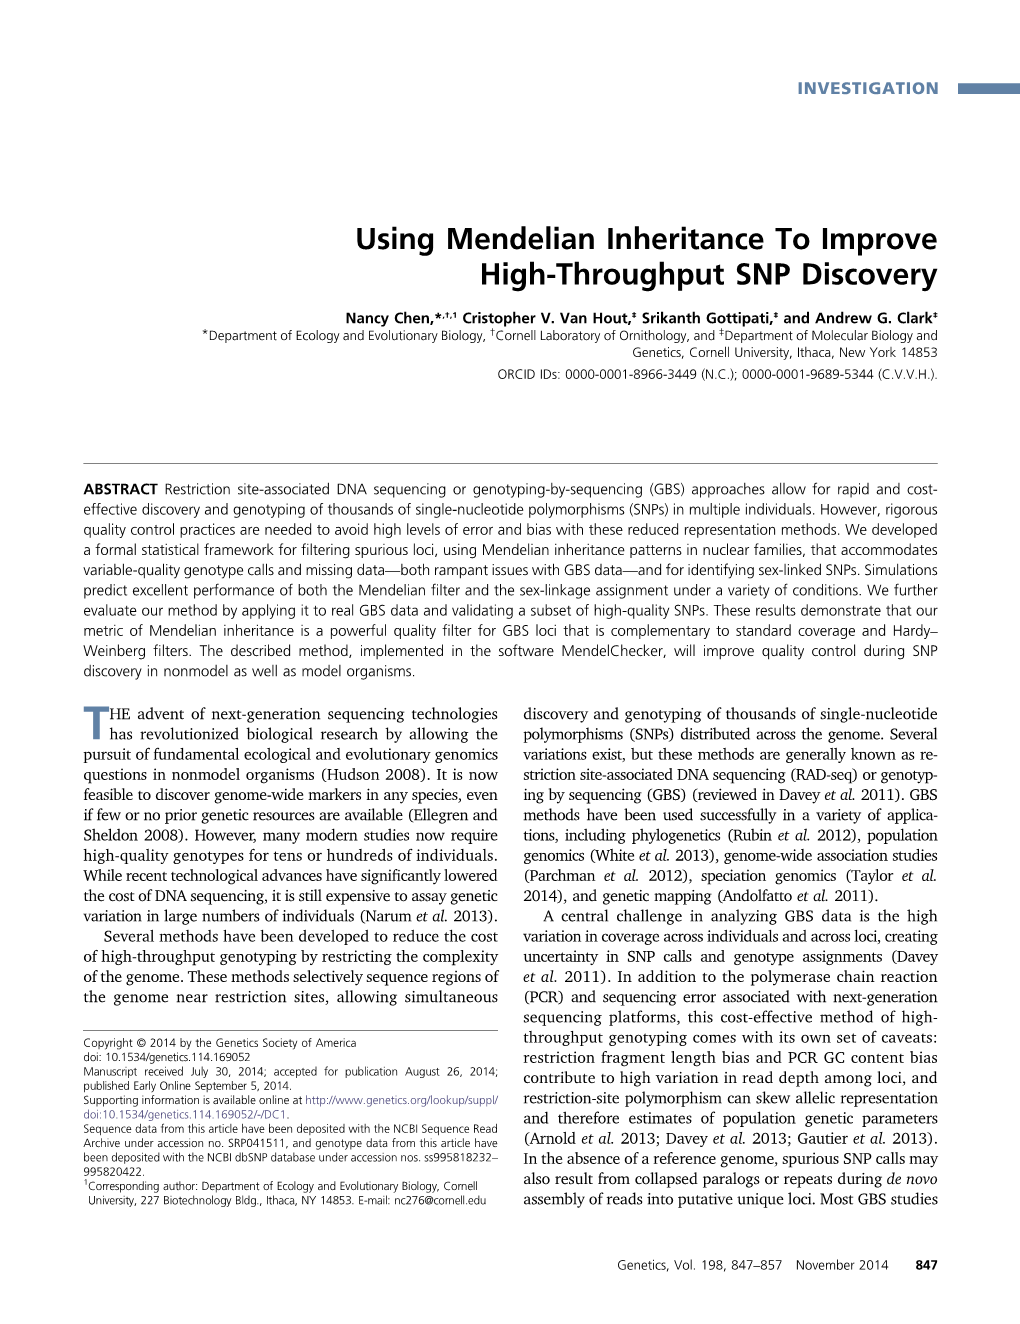 Using Mendelian Inheritance to Improve High-Throughput SNP Discovery